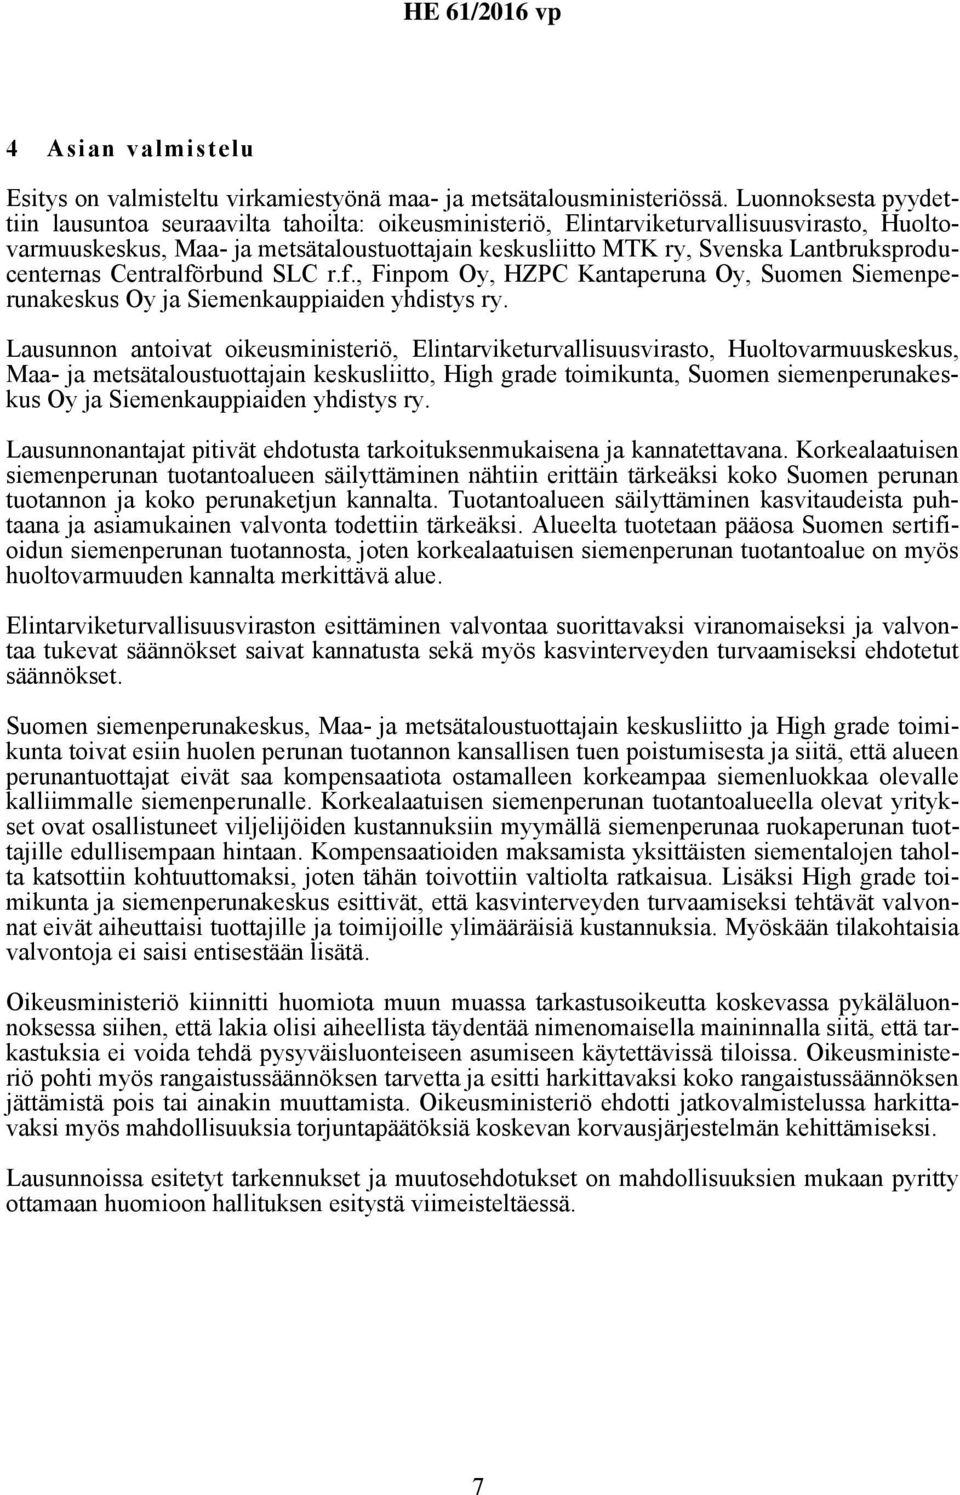 Lantbruksproducenternas Centralförbund SLC r.f., Finpom Oy, HZPC Kantaperuna Oy, Suomen Siemenperunakeskus Oy ja Siemenkauppiaiden yhdistys ry.